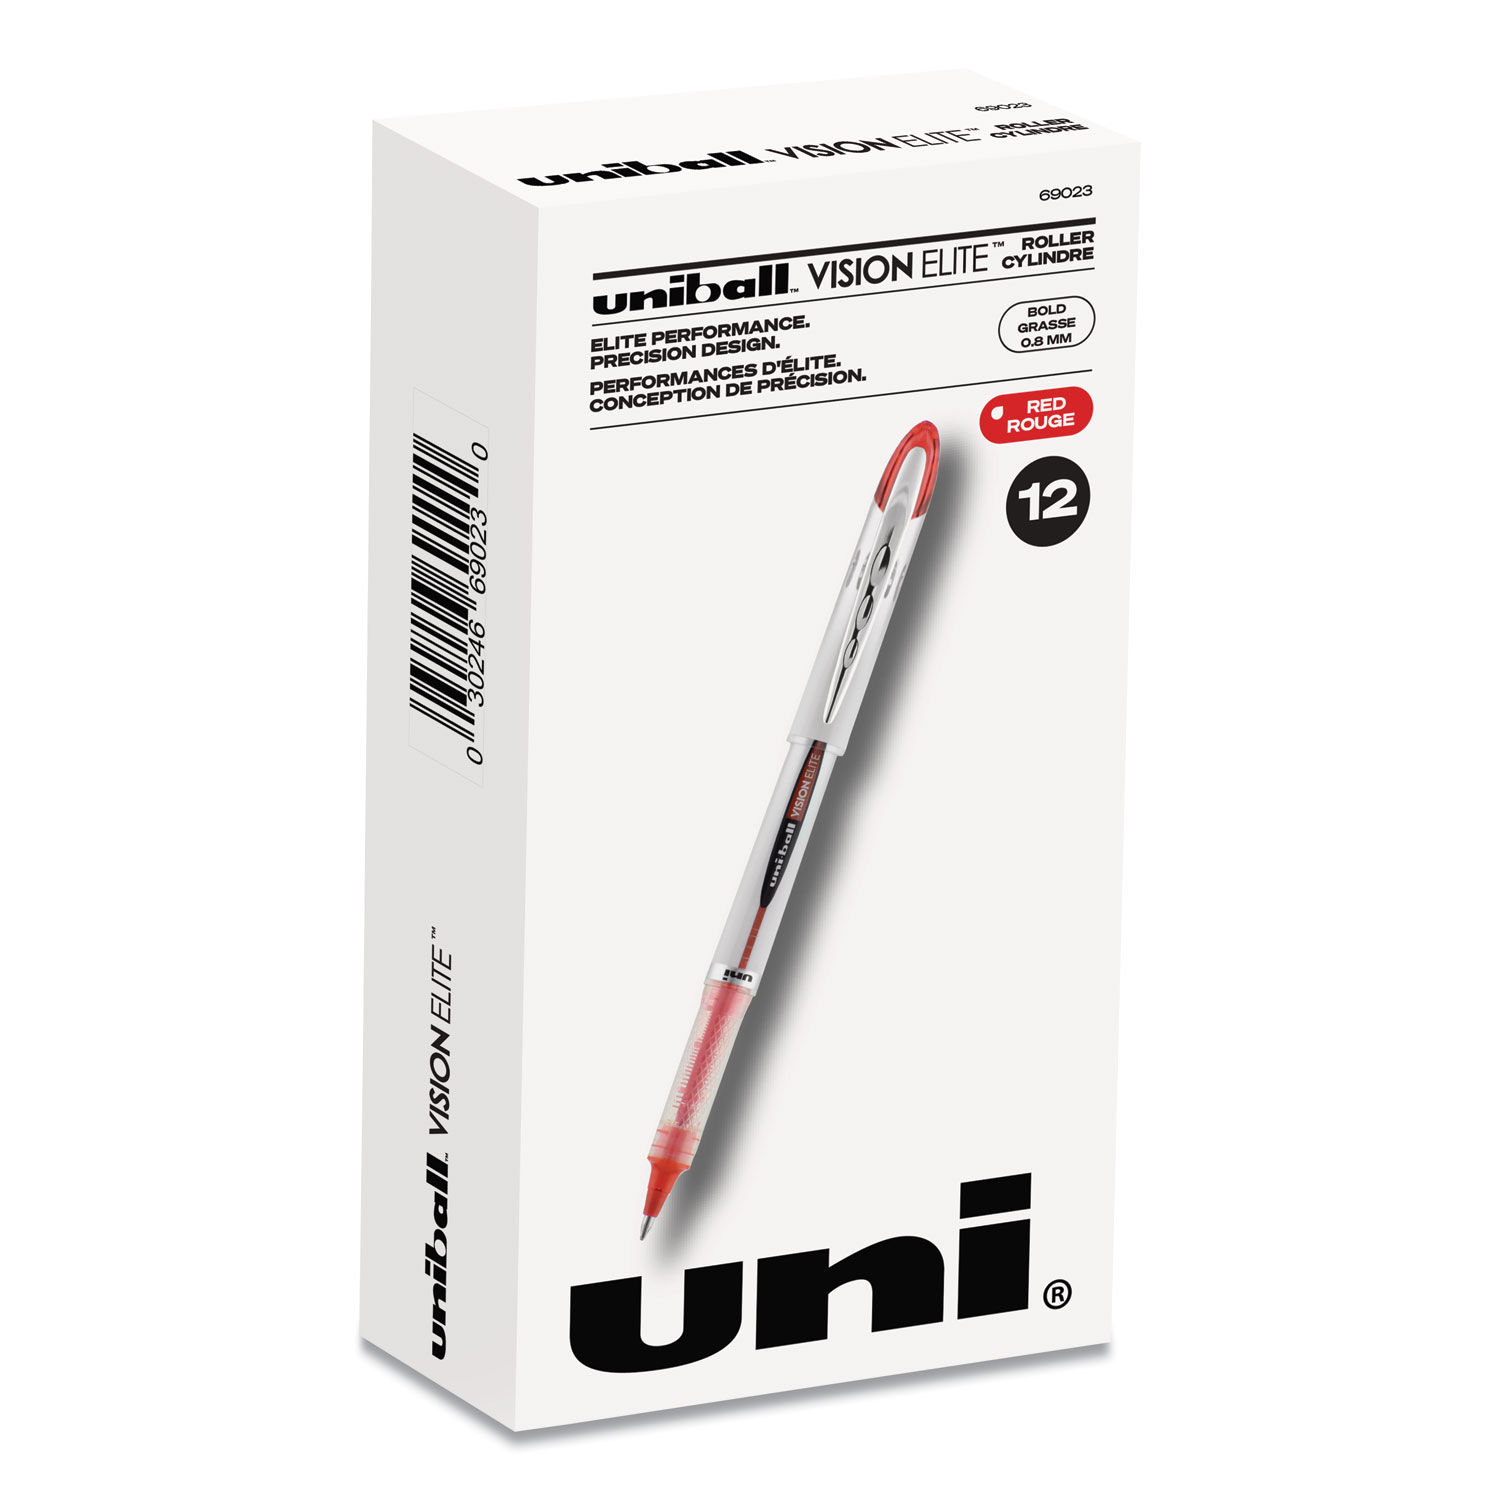 Uni-ball VISION ELITE Roller Ball Pen Bold 0.8 mm, Red Ink, White/Red Barrel